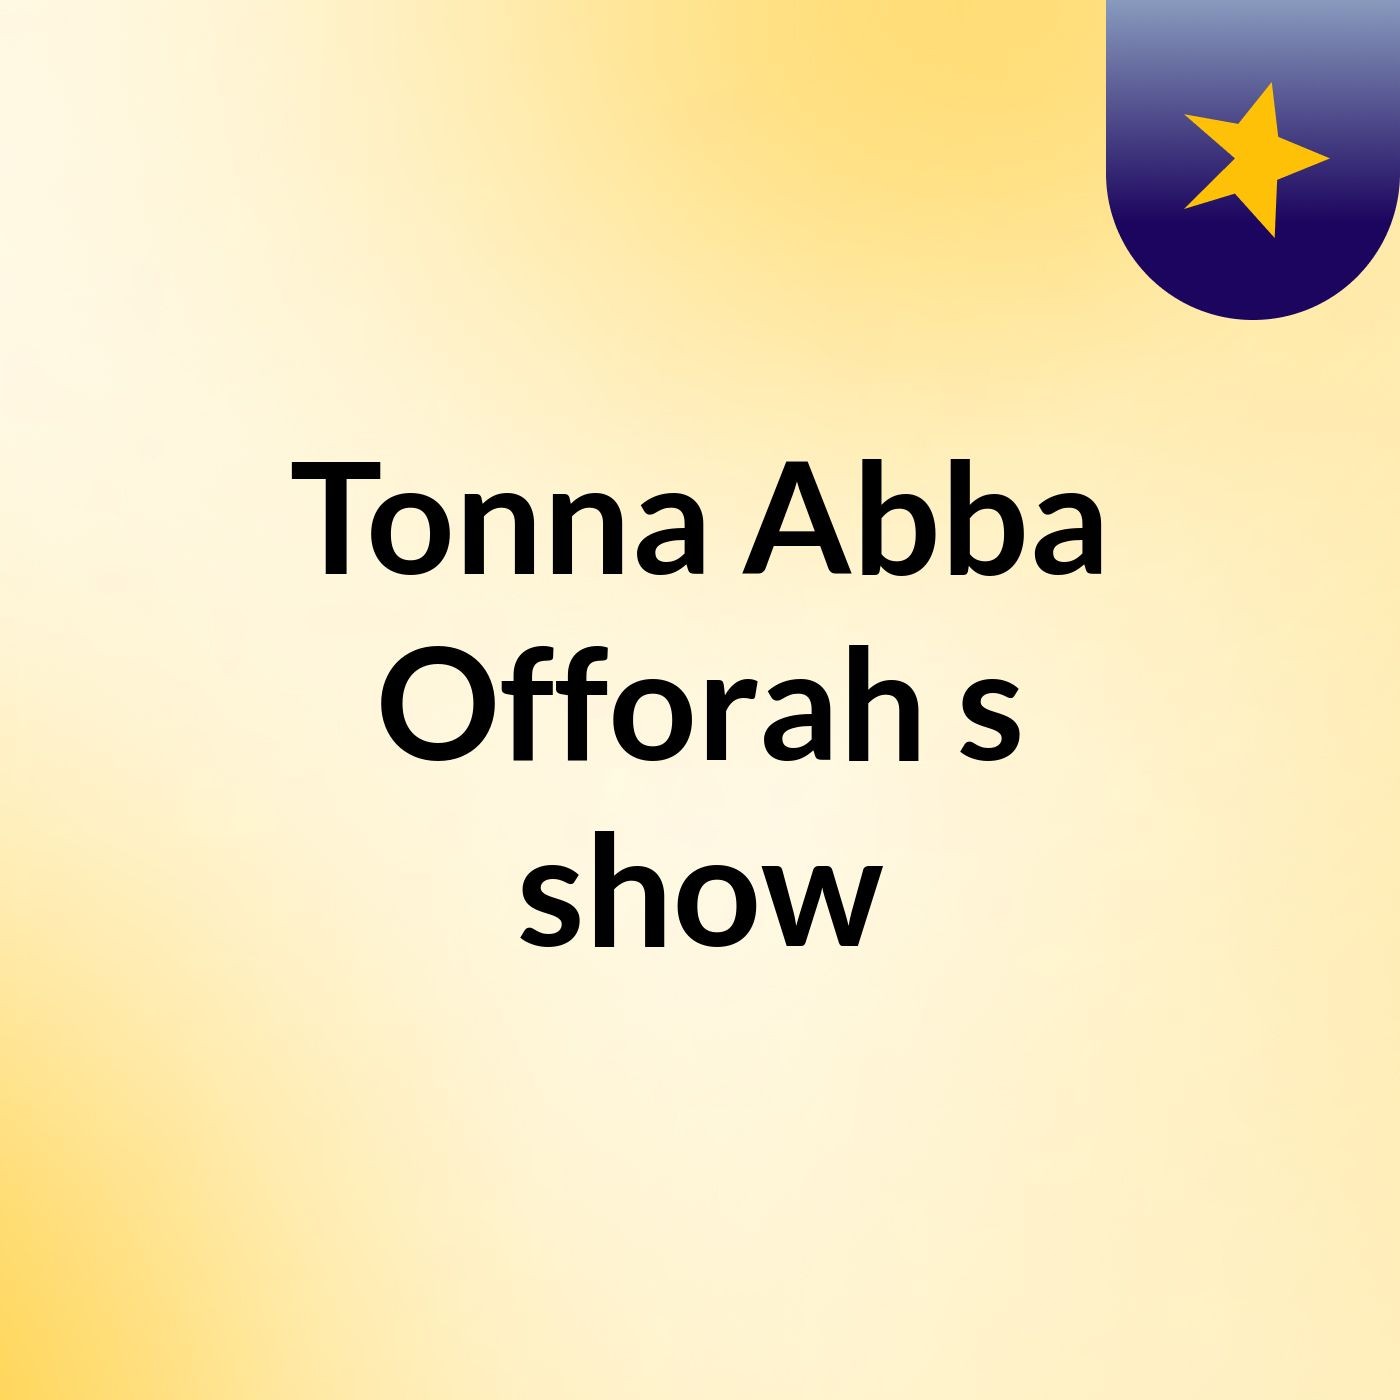 Tonna Abba Offorah's show